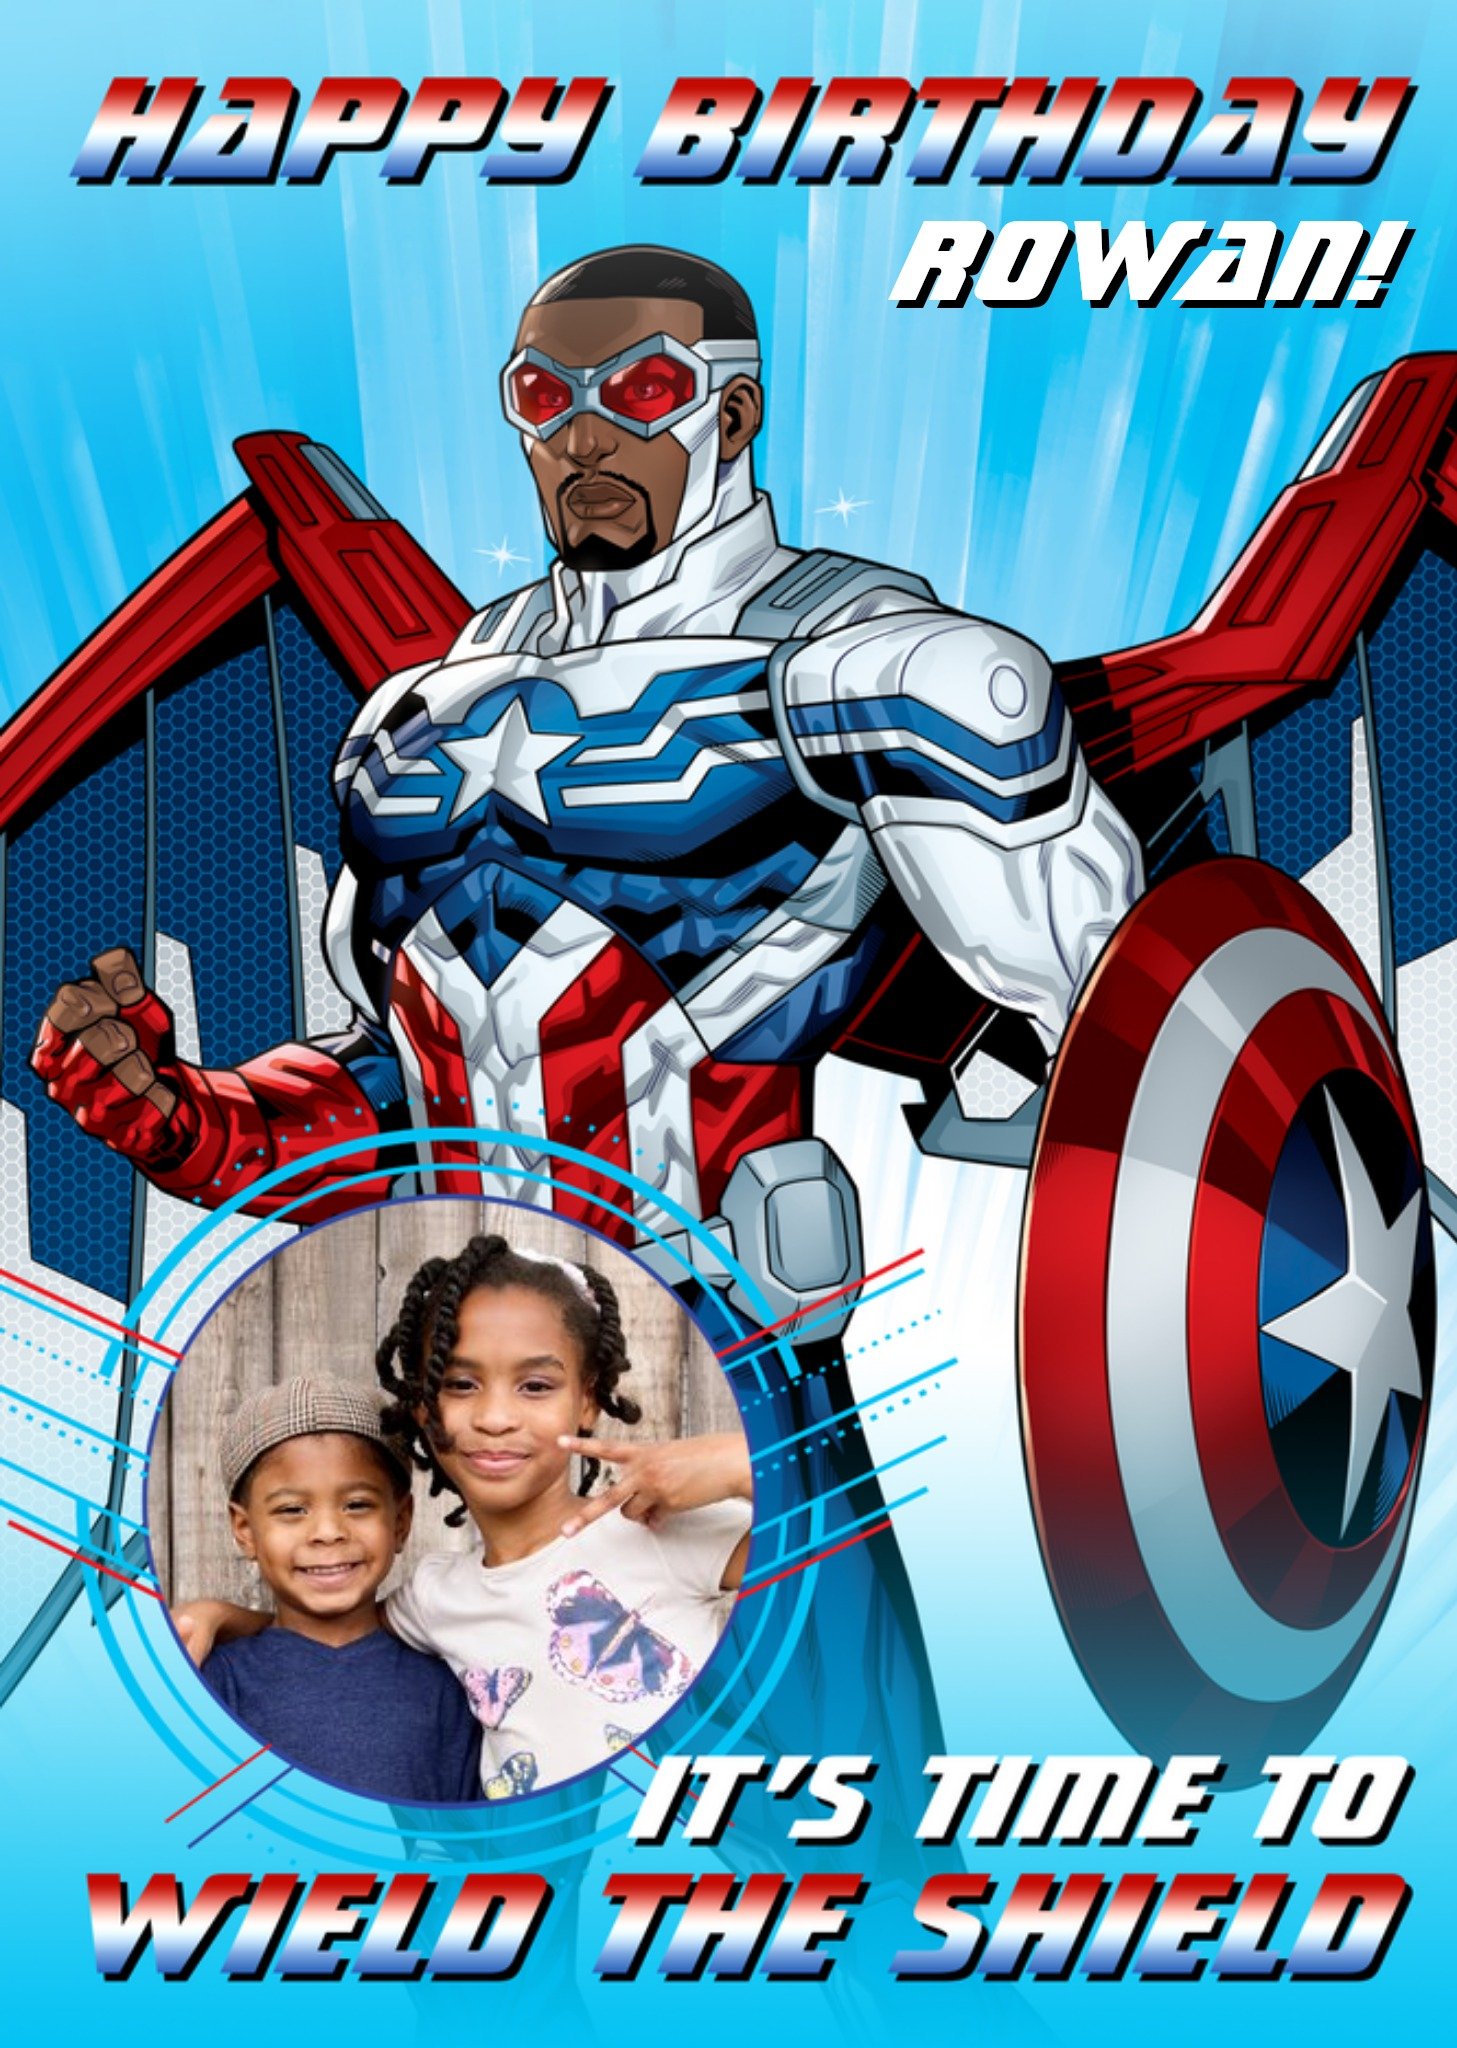 Marvel Avengers Falcon Wield The Shield Photo Upload Birthday Card Ecard